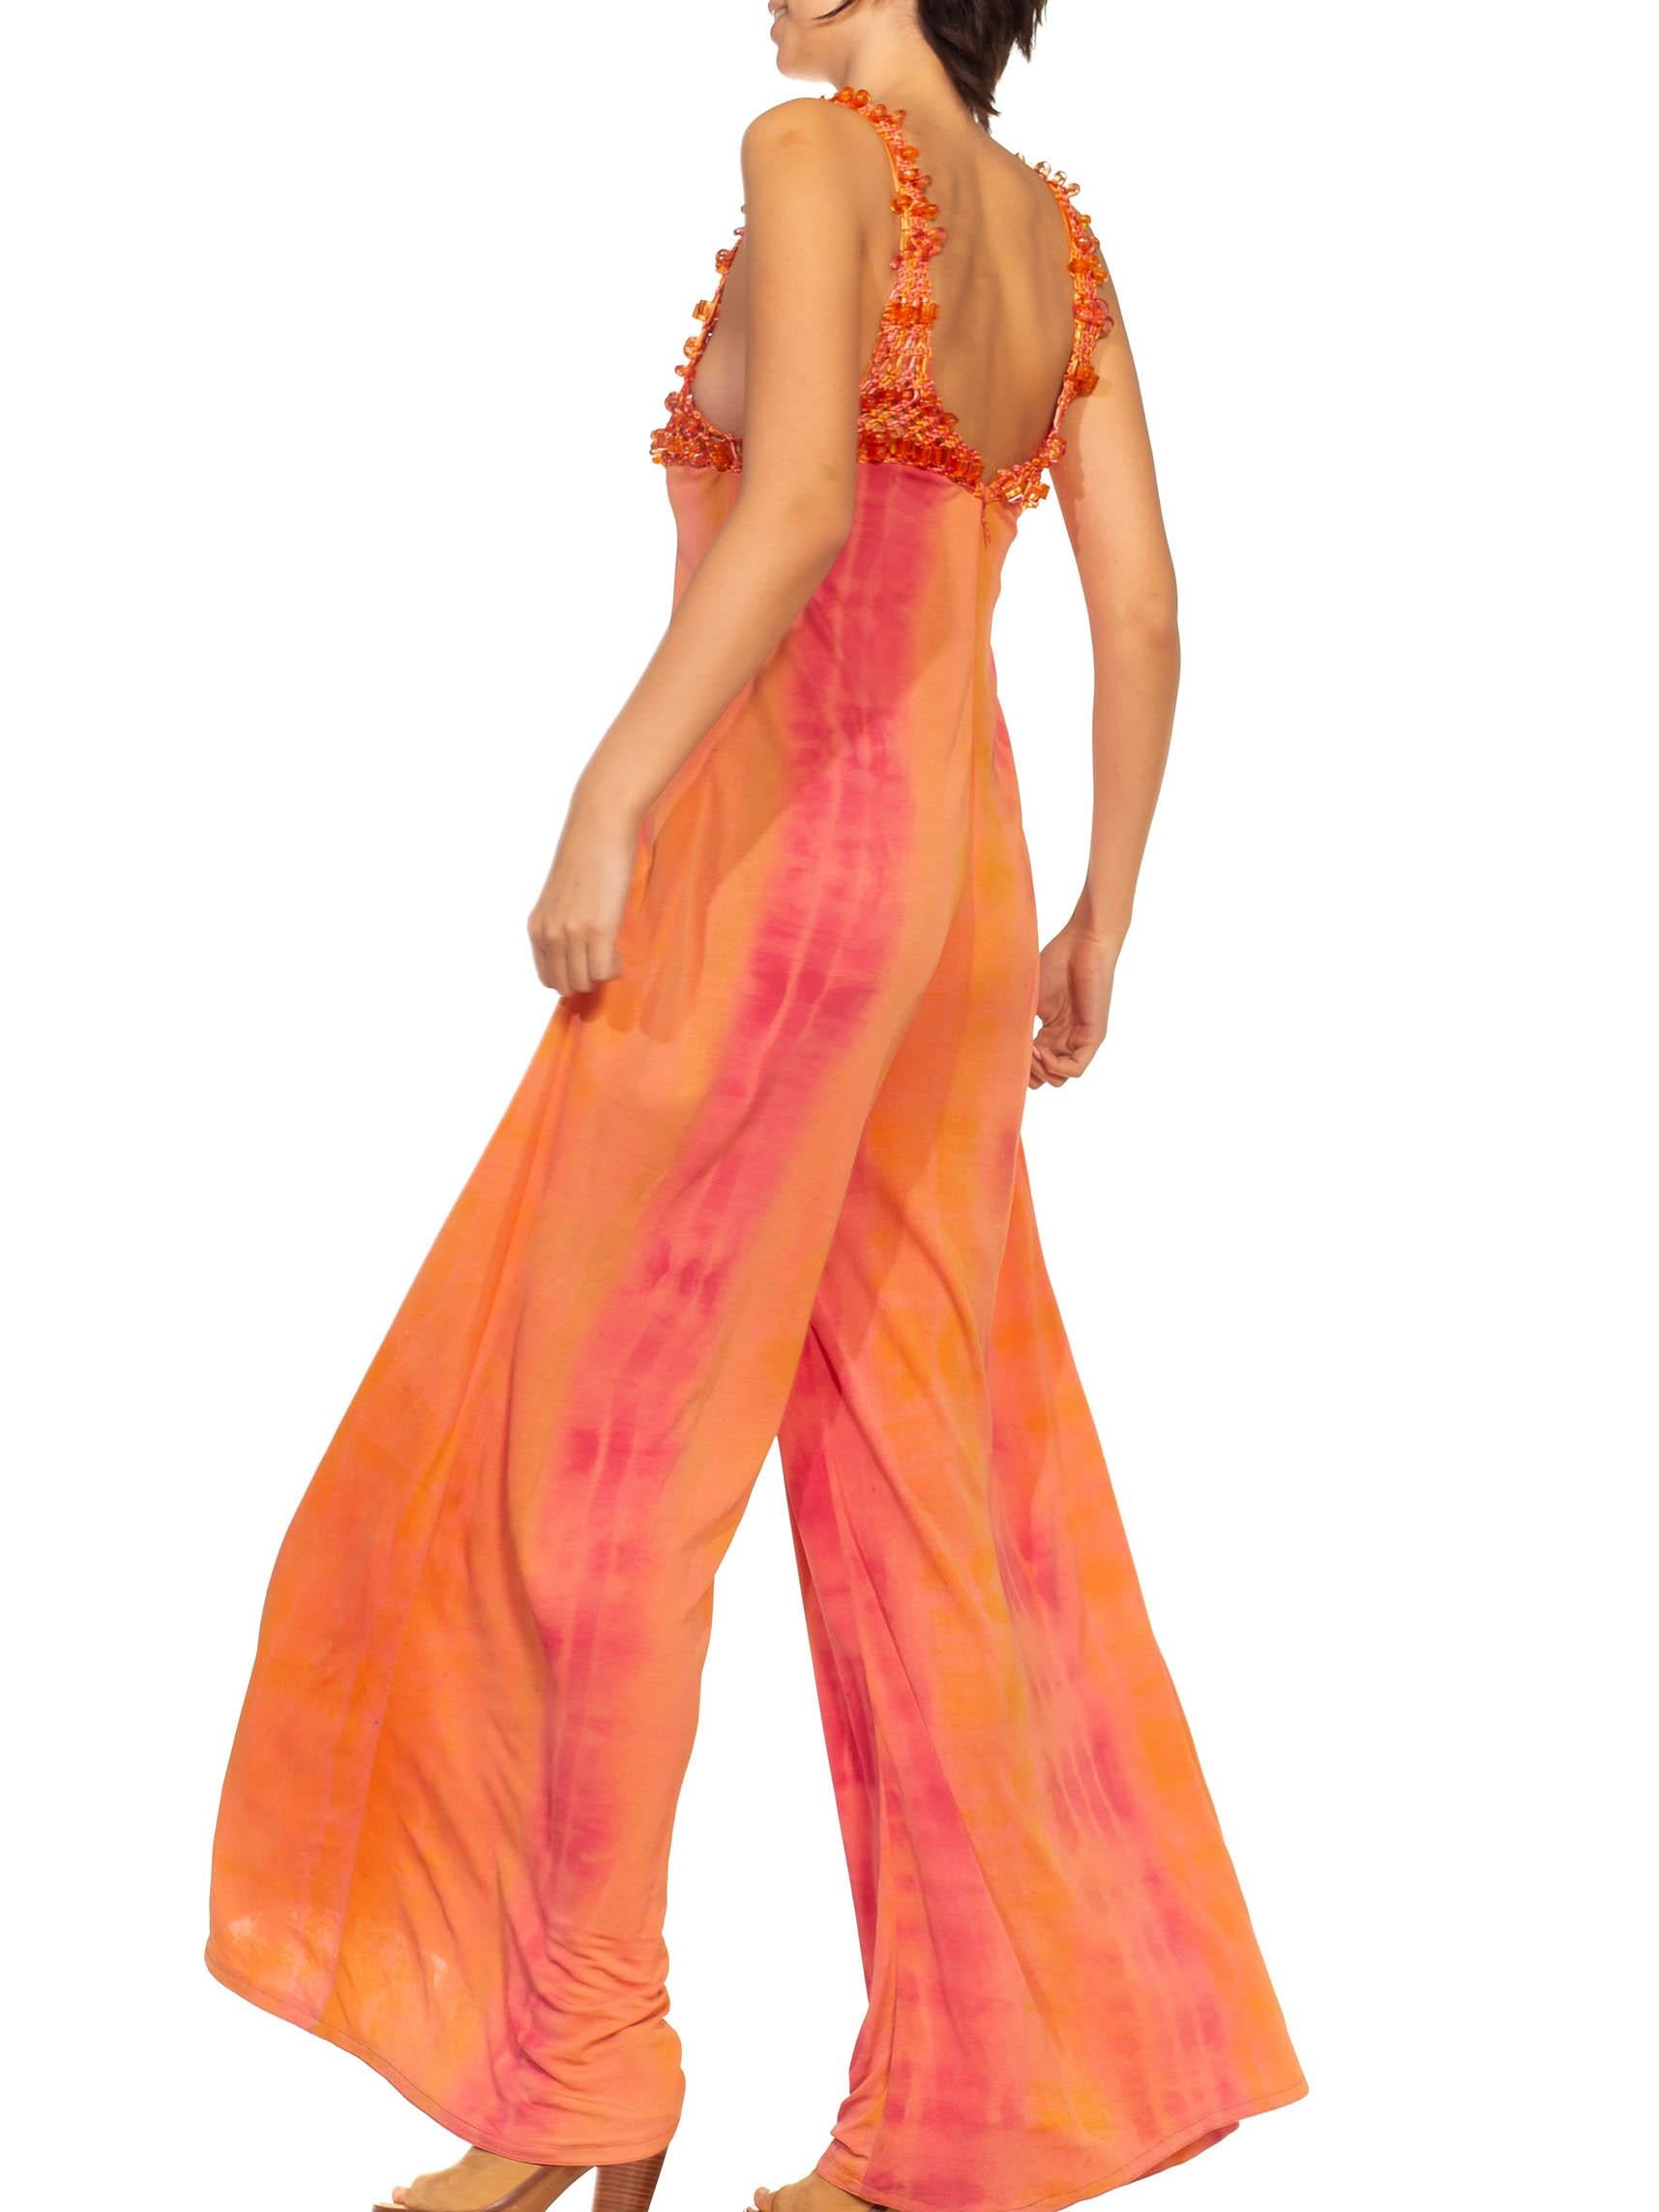 Women's 2000S Orange Peach Poly Blend Jersey Tie Dye Jumpsuit With Crochet Beaded Straps For Sale